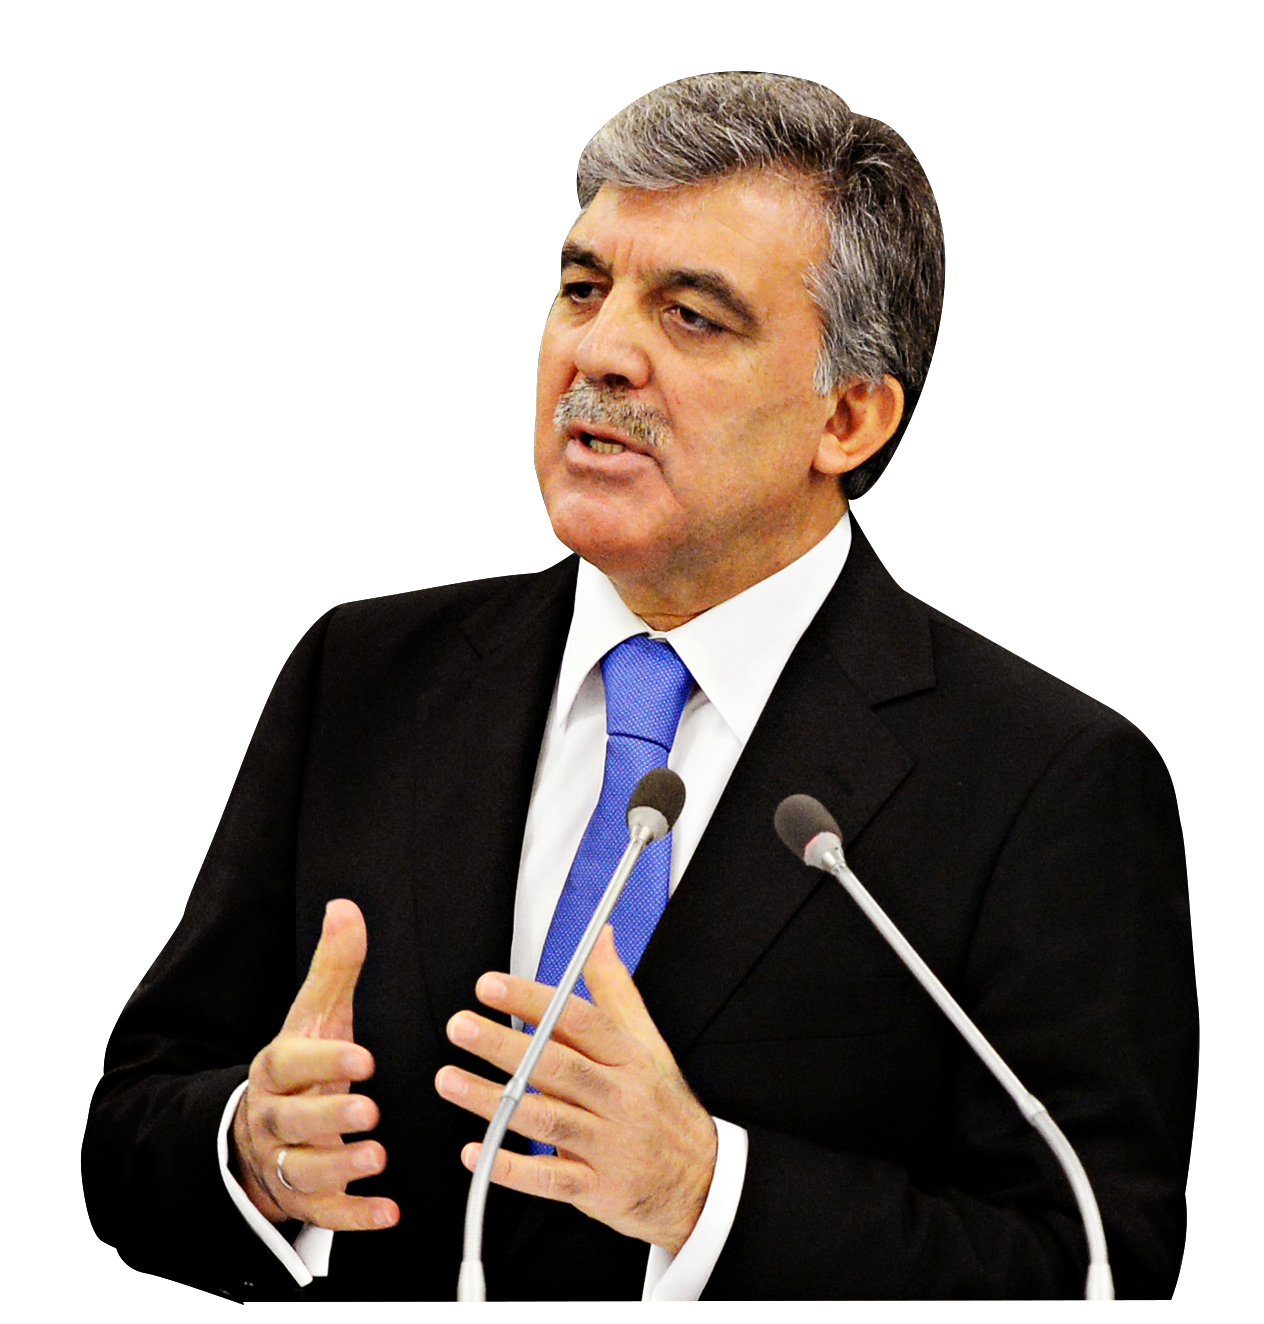 Абдулла Гюль (2007-2014);. Саакашвили Абдулла Гюль Алиев. Человек Гюль профессор. Абдулла гюль